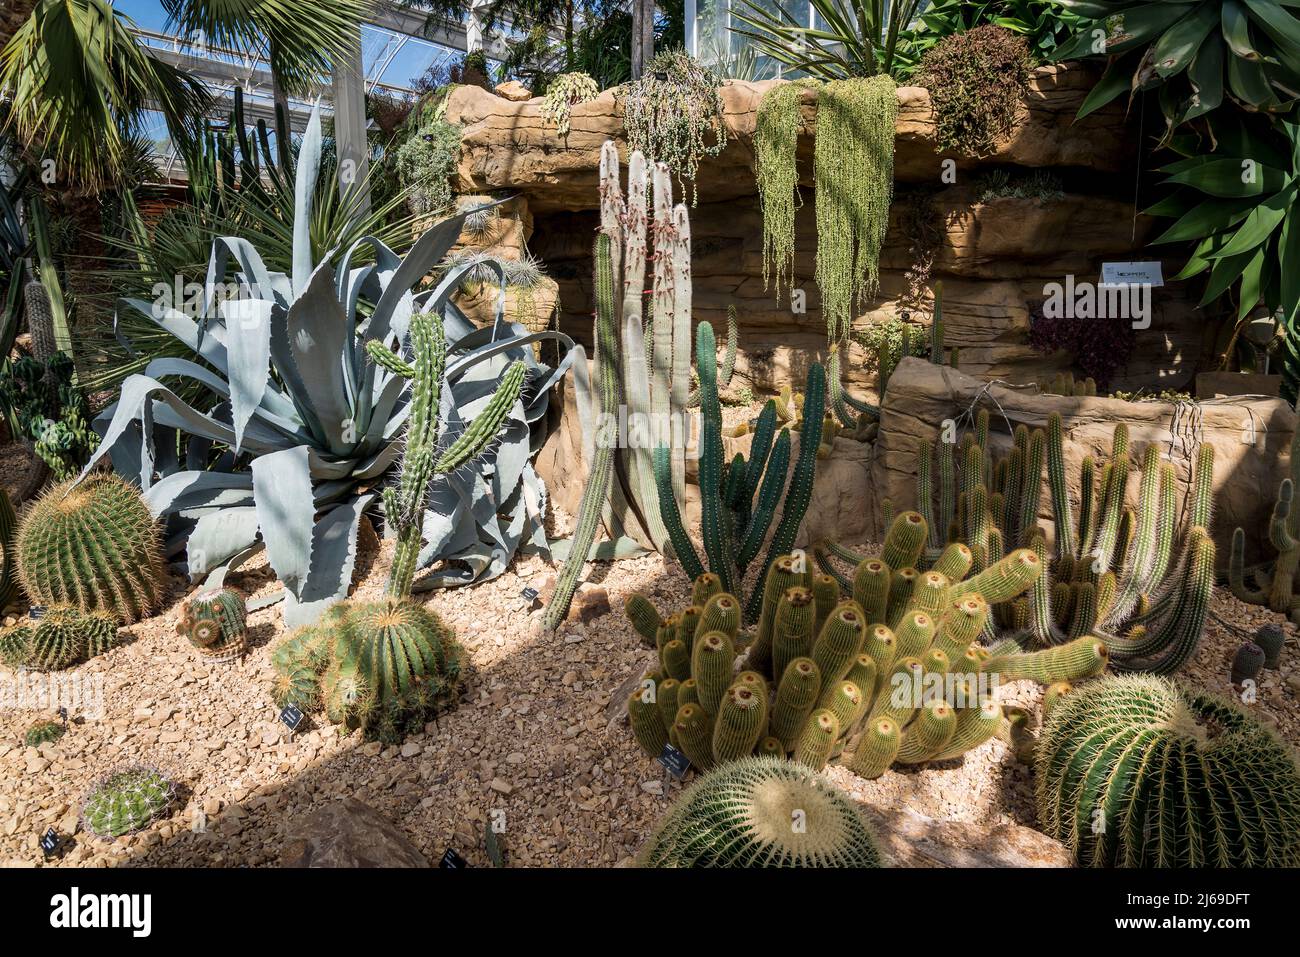 Cacti & succulents / RHS Gardening